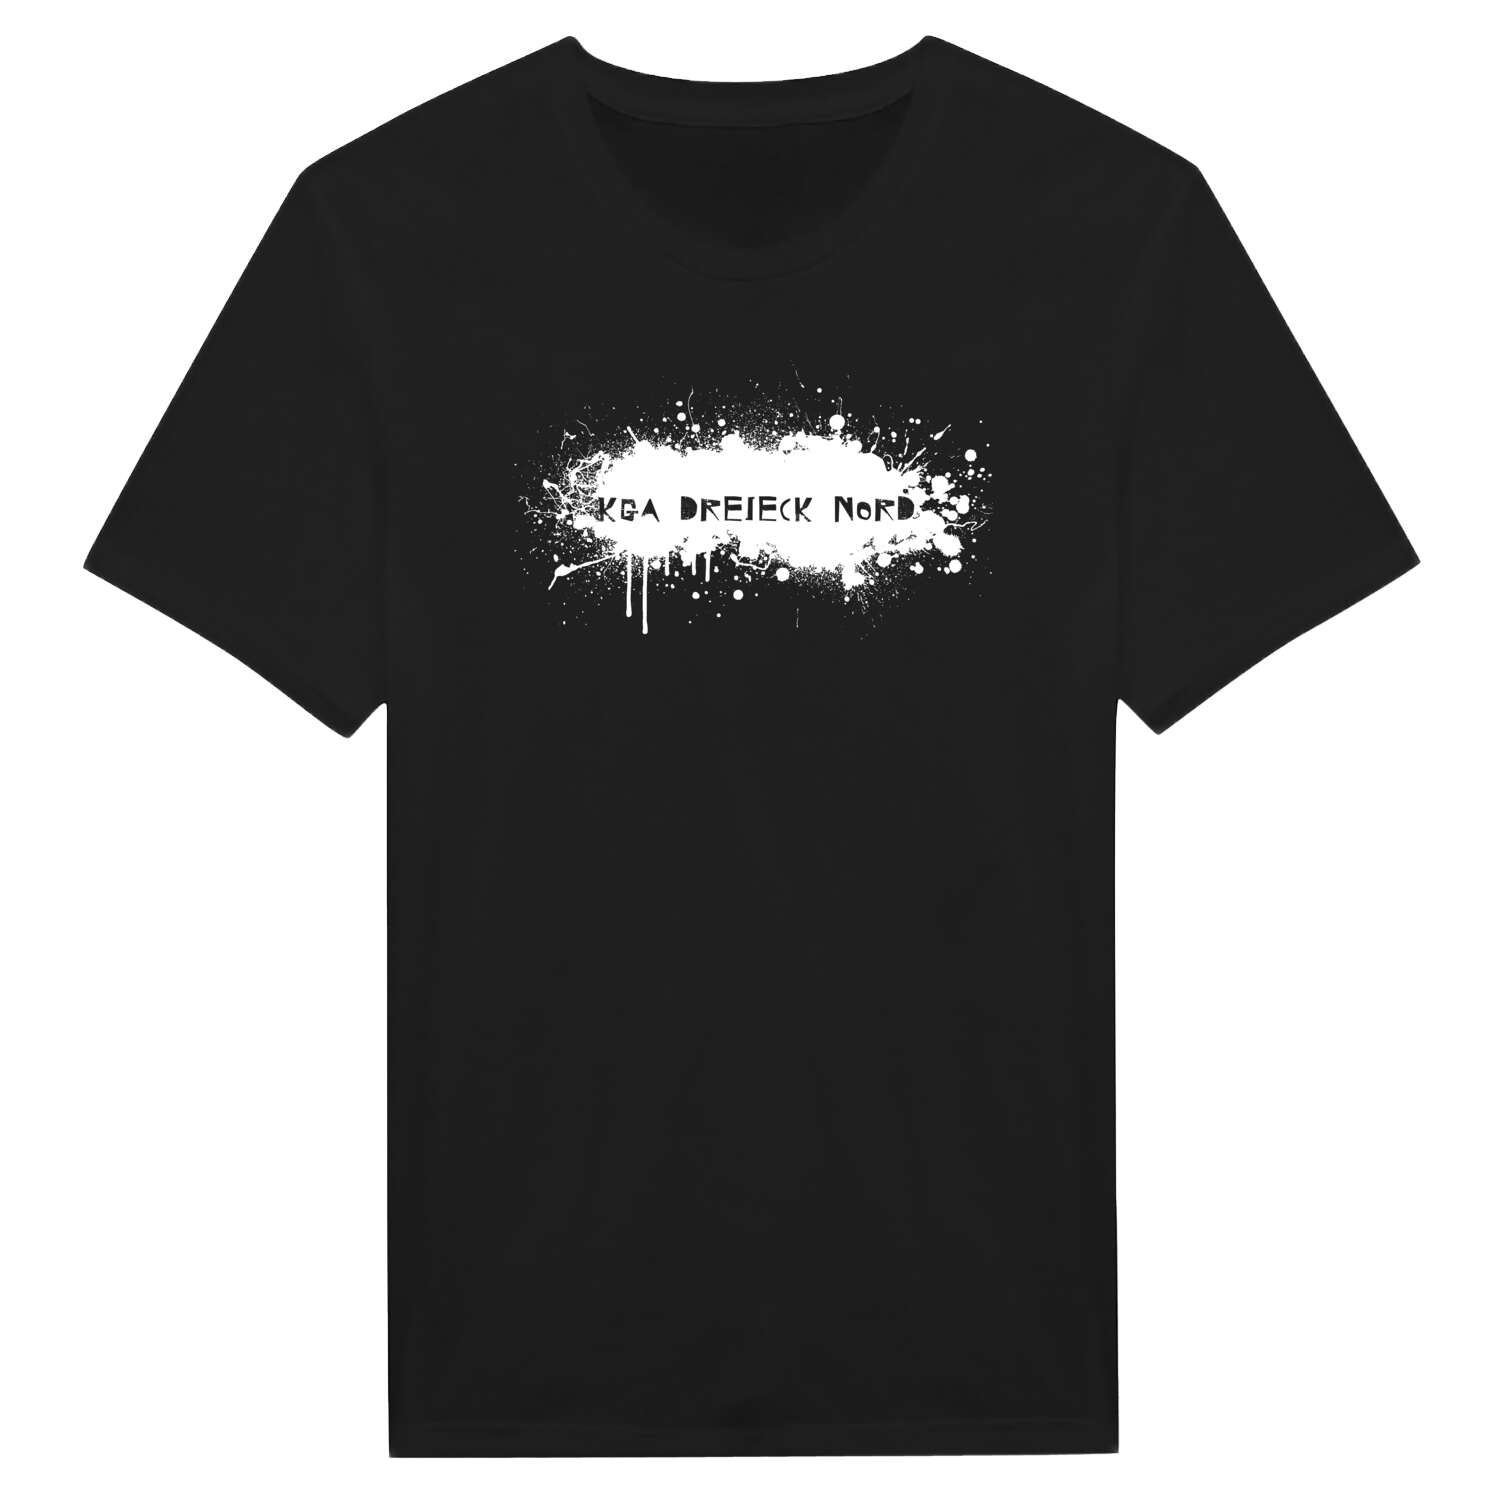 KGA Dreieck Nord T-Shirt »Paint Splash Punk«